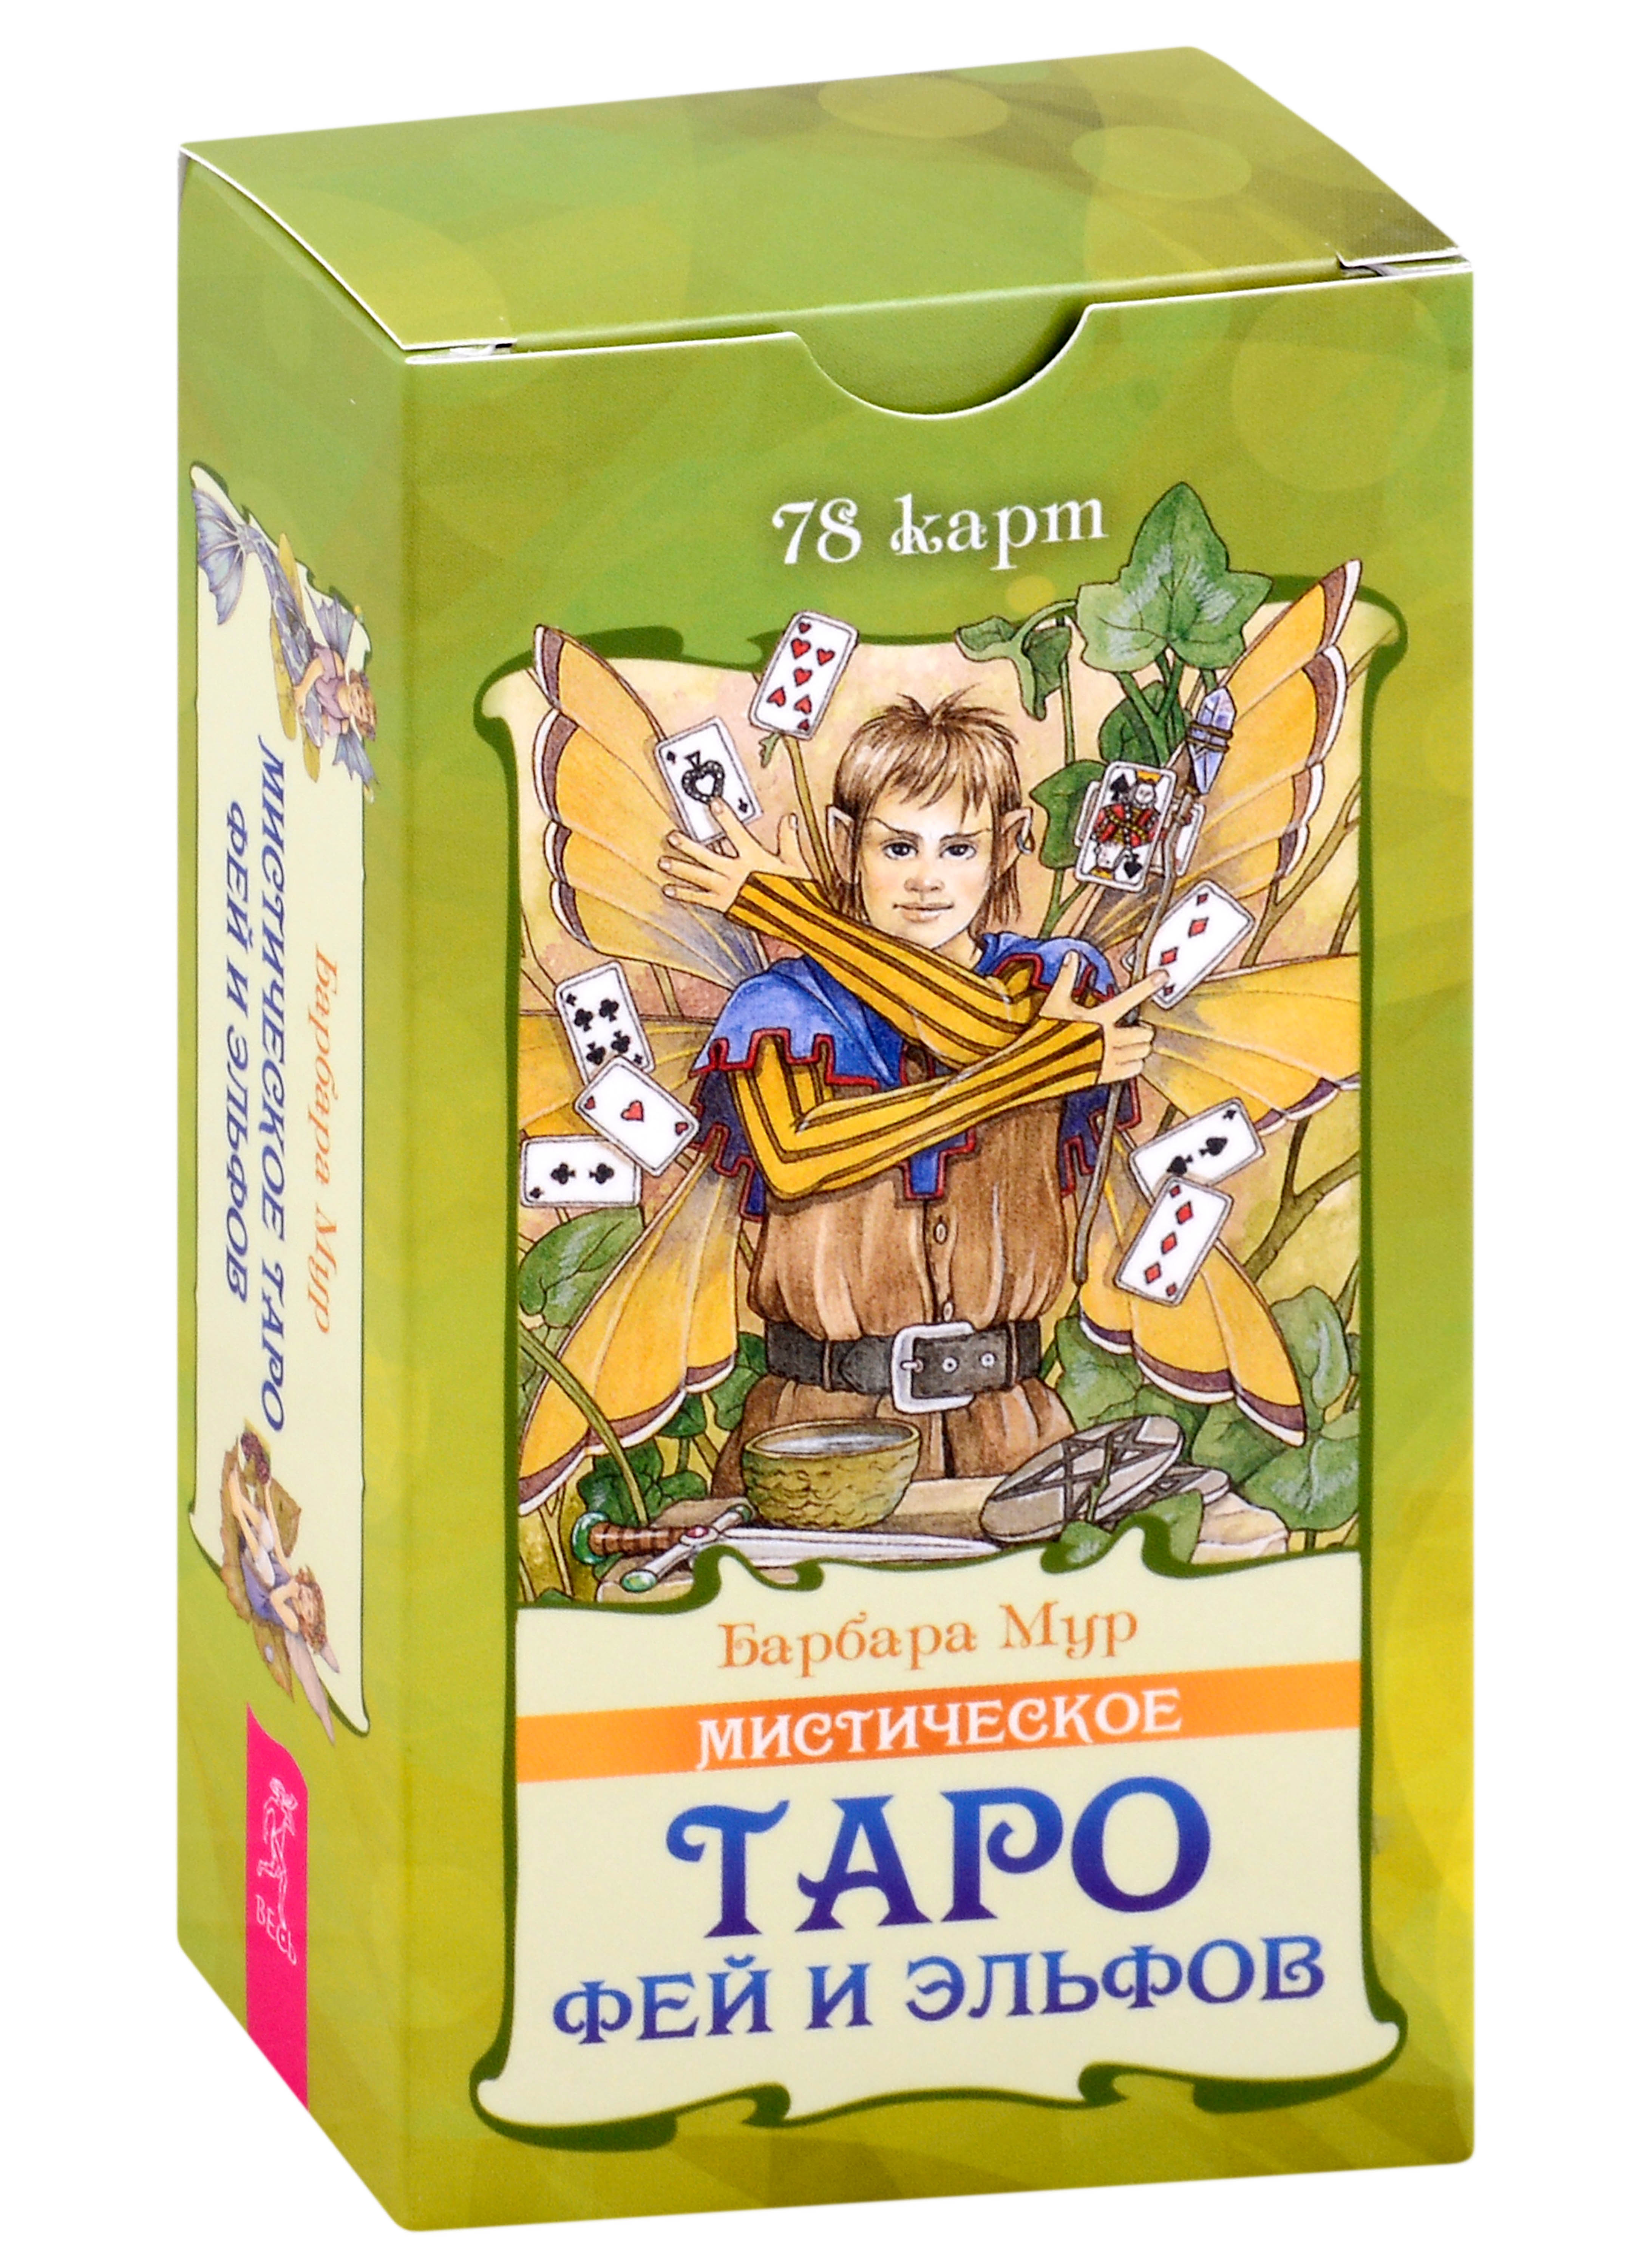 Мур Барбара Мистическое Таро фей и эльфов (78 карт) (5015) мур б мистическое таро фей и эльфов